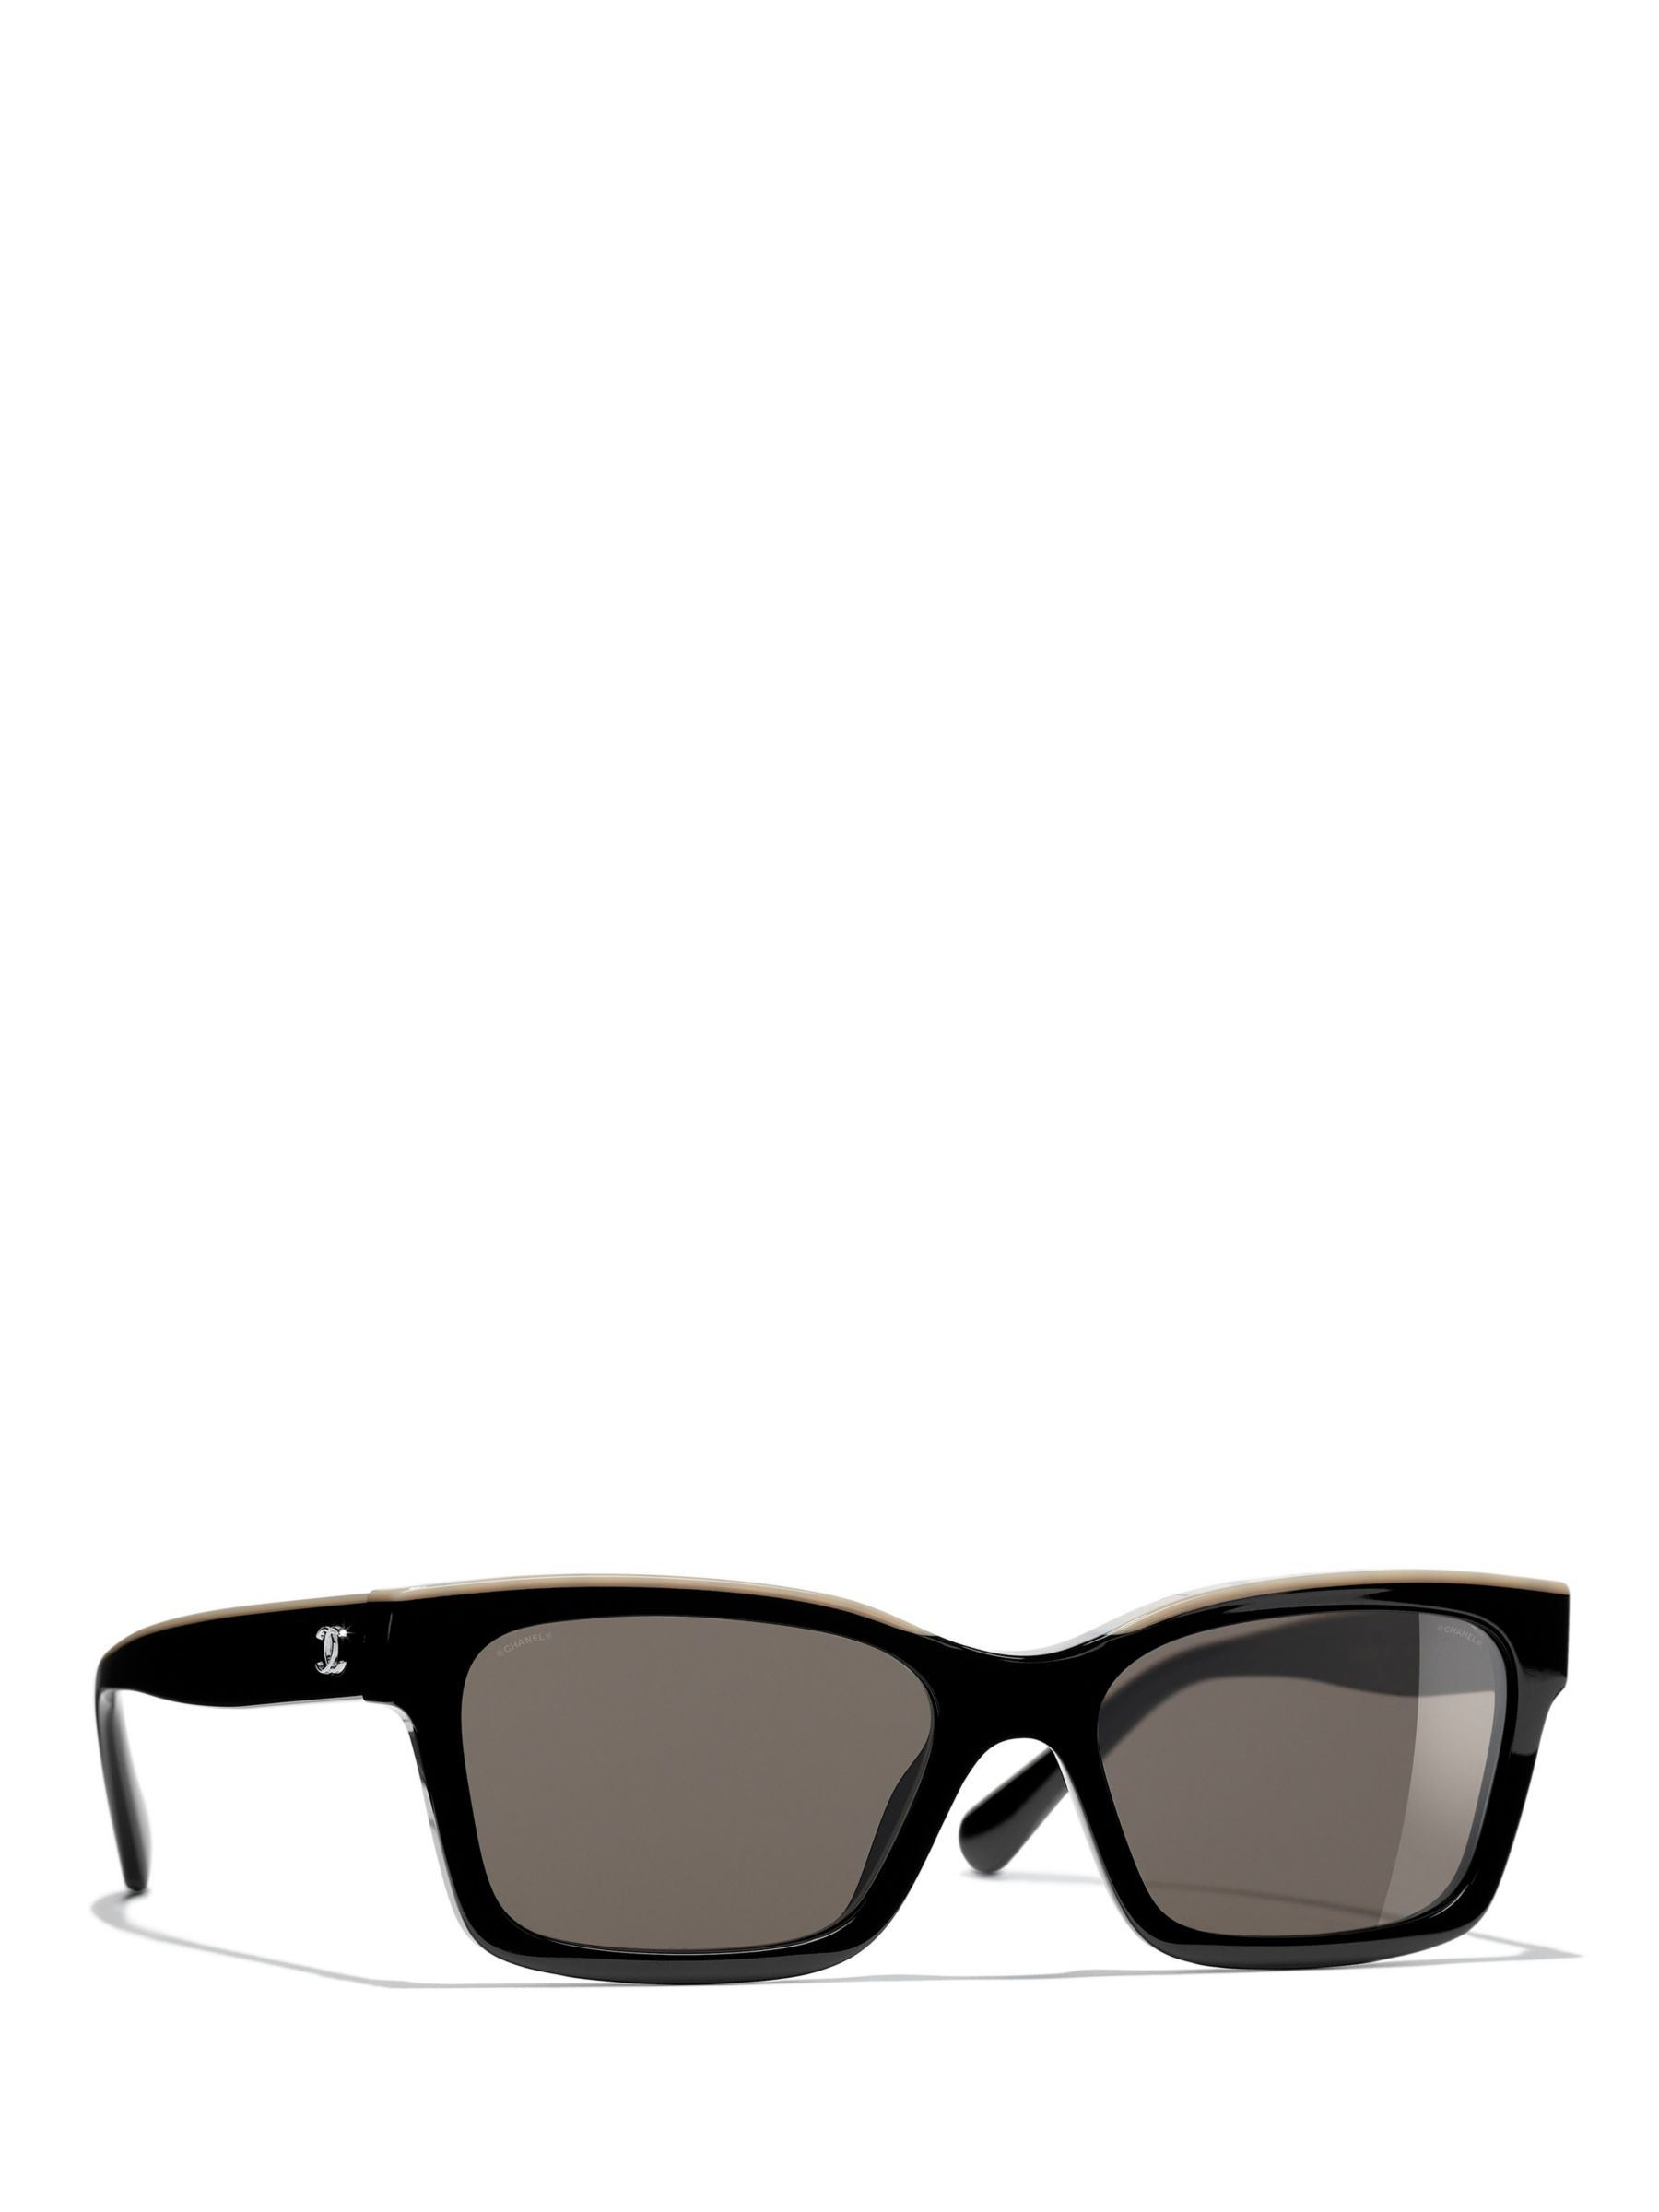 Chanel sunglasses black square - Gem